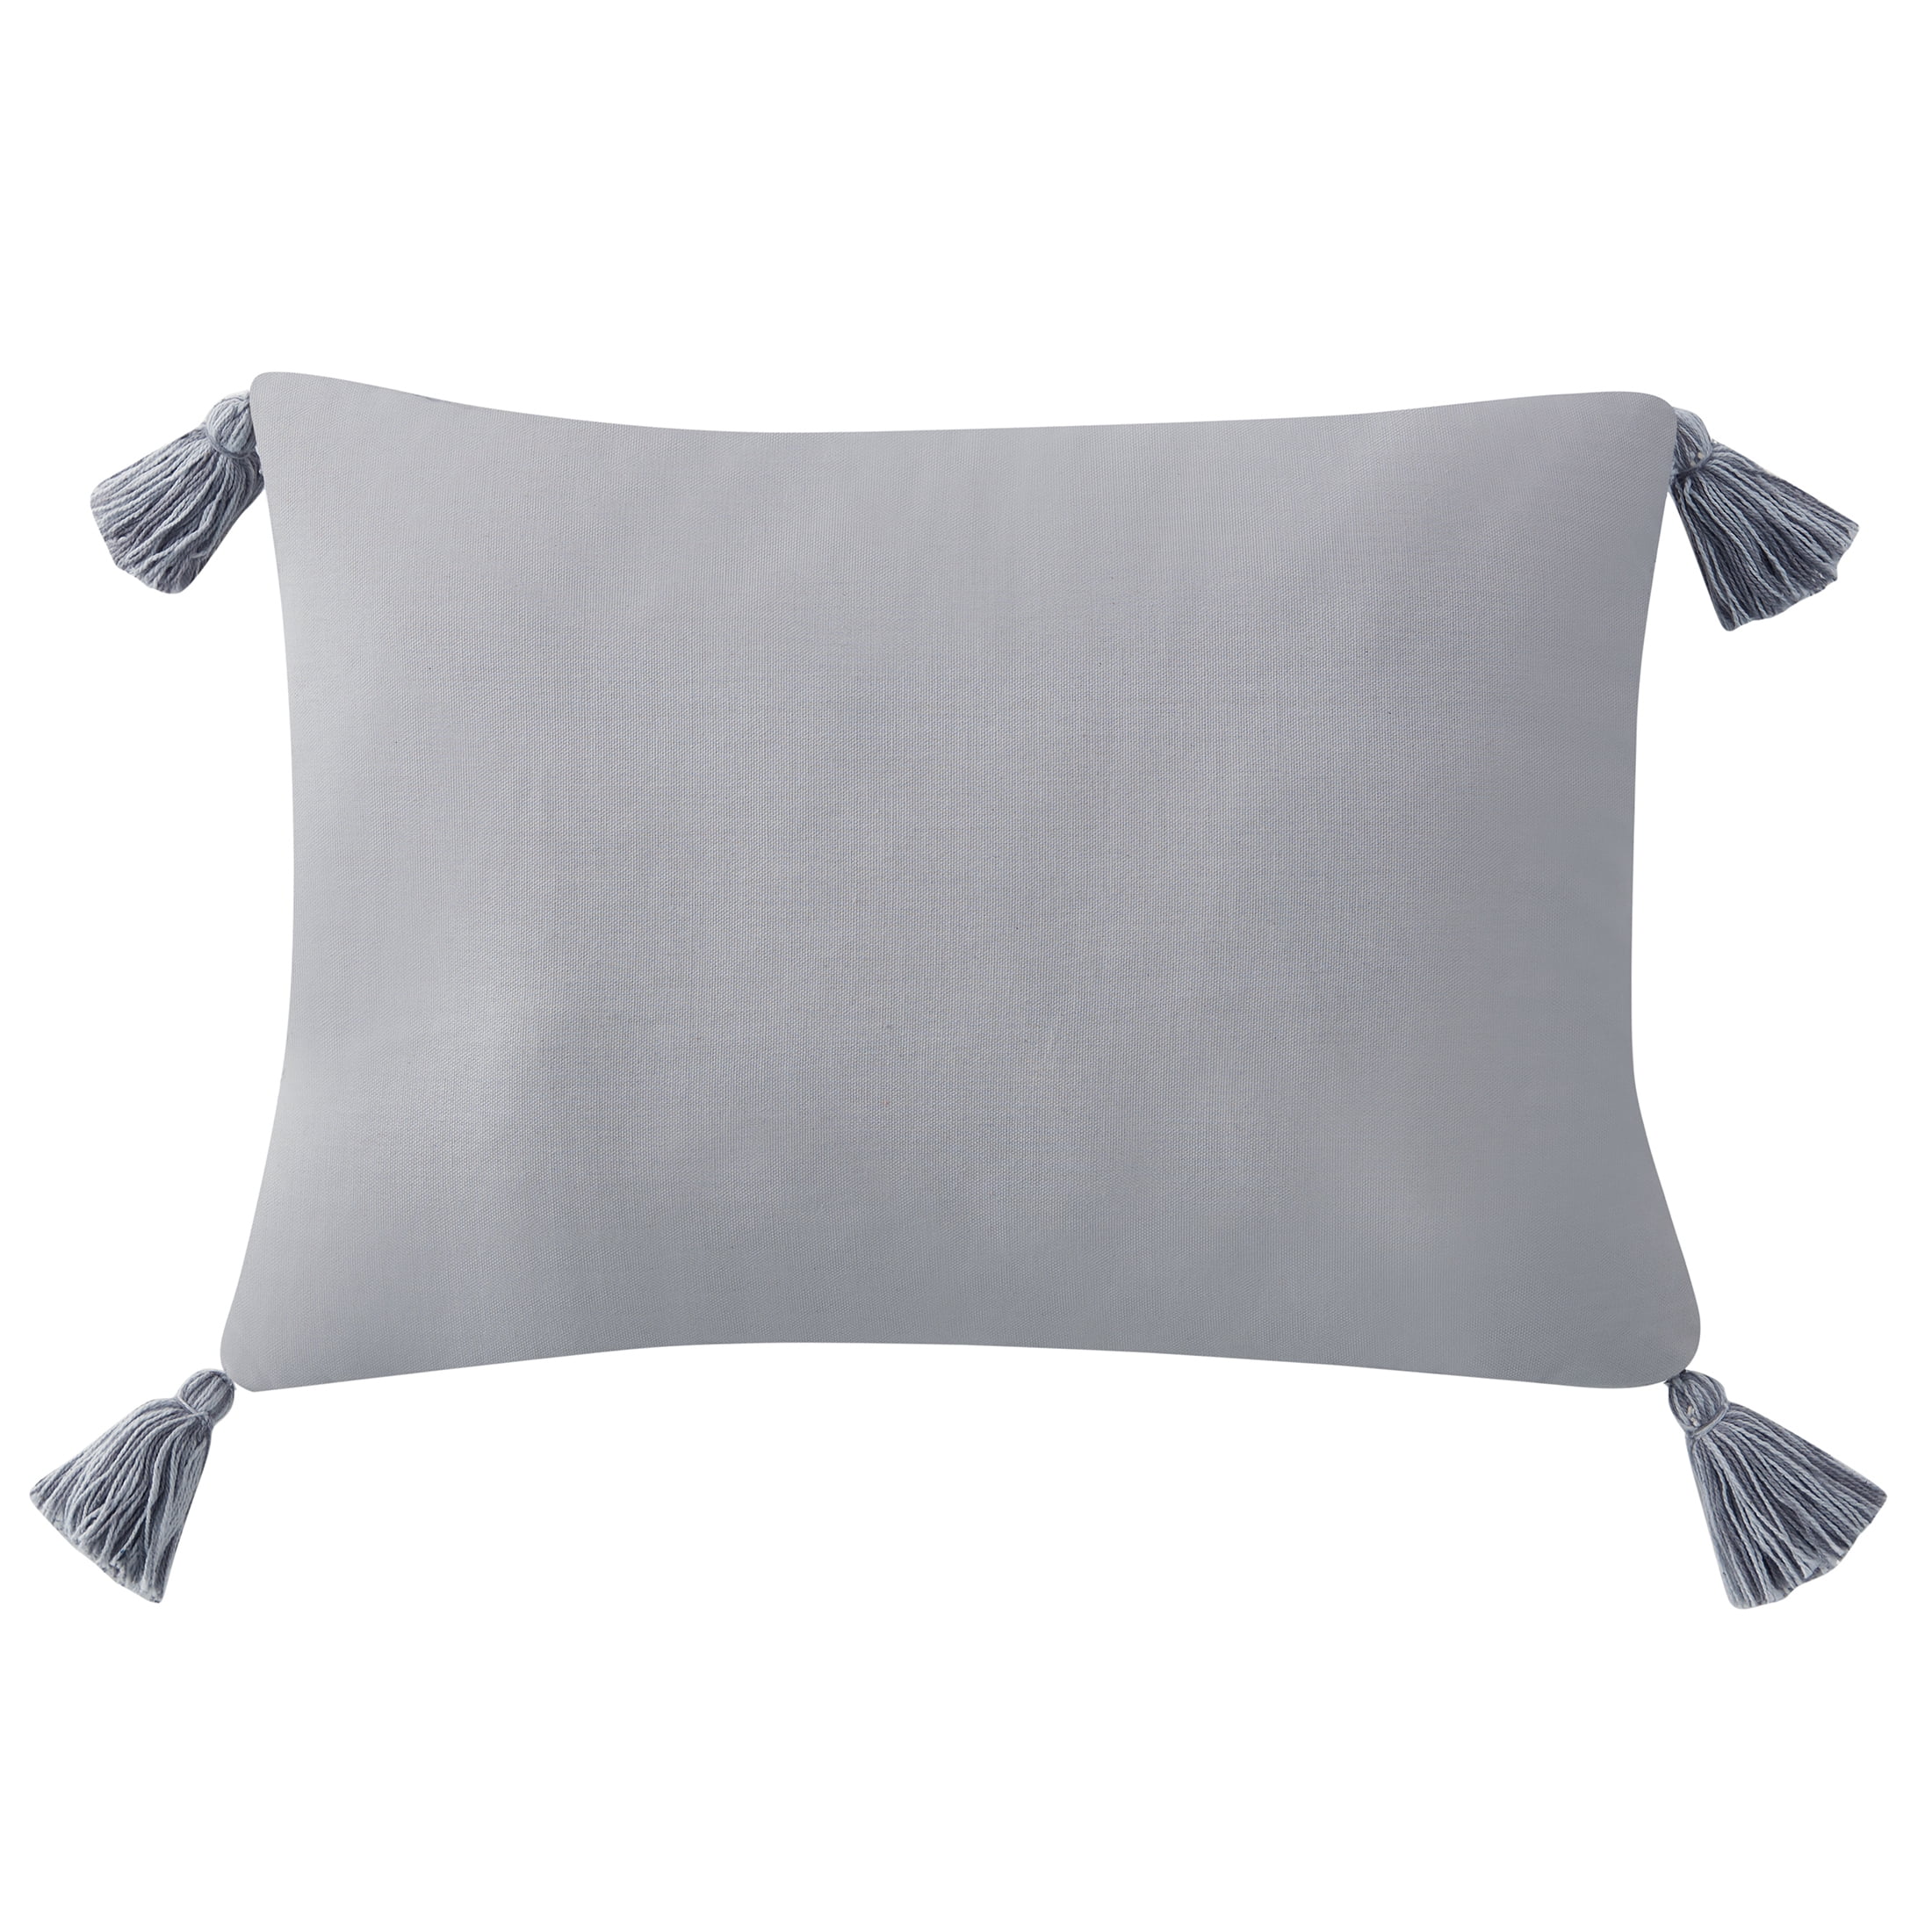 Life Styles Gray Lattice 18 Square Throw Pillow w/ Tassels